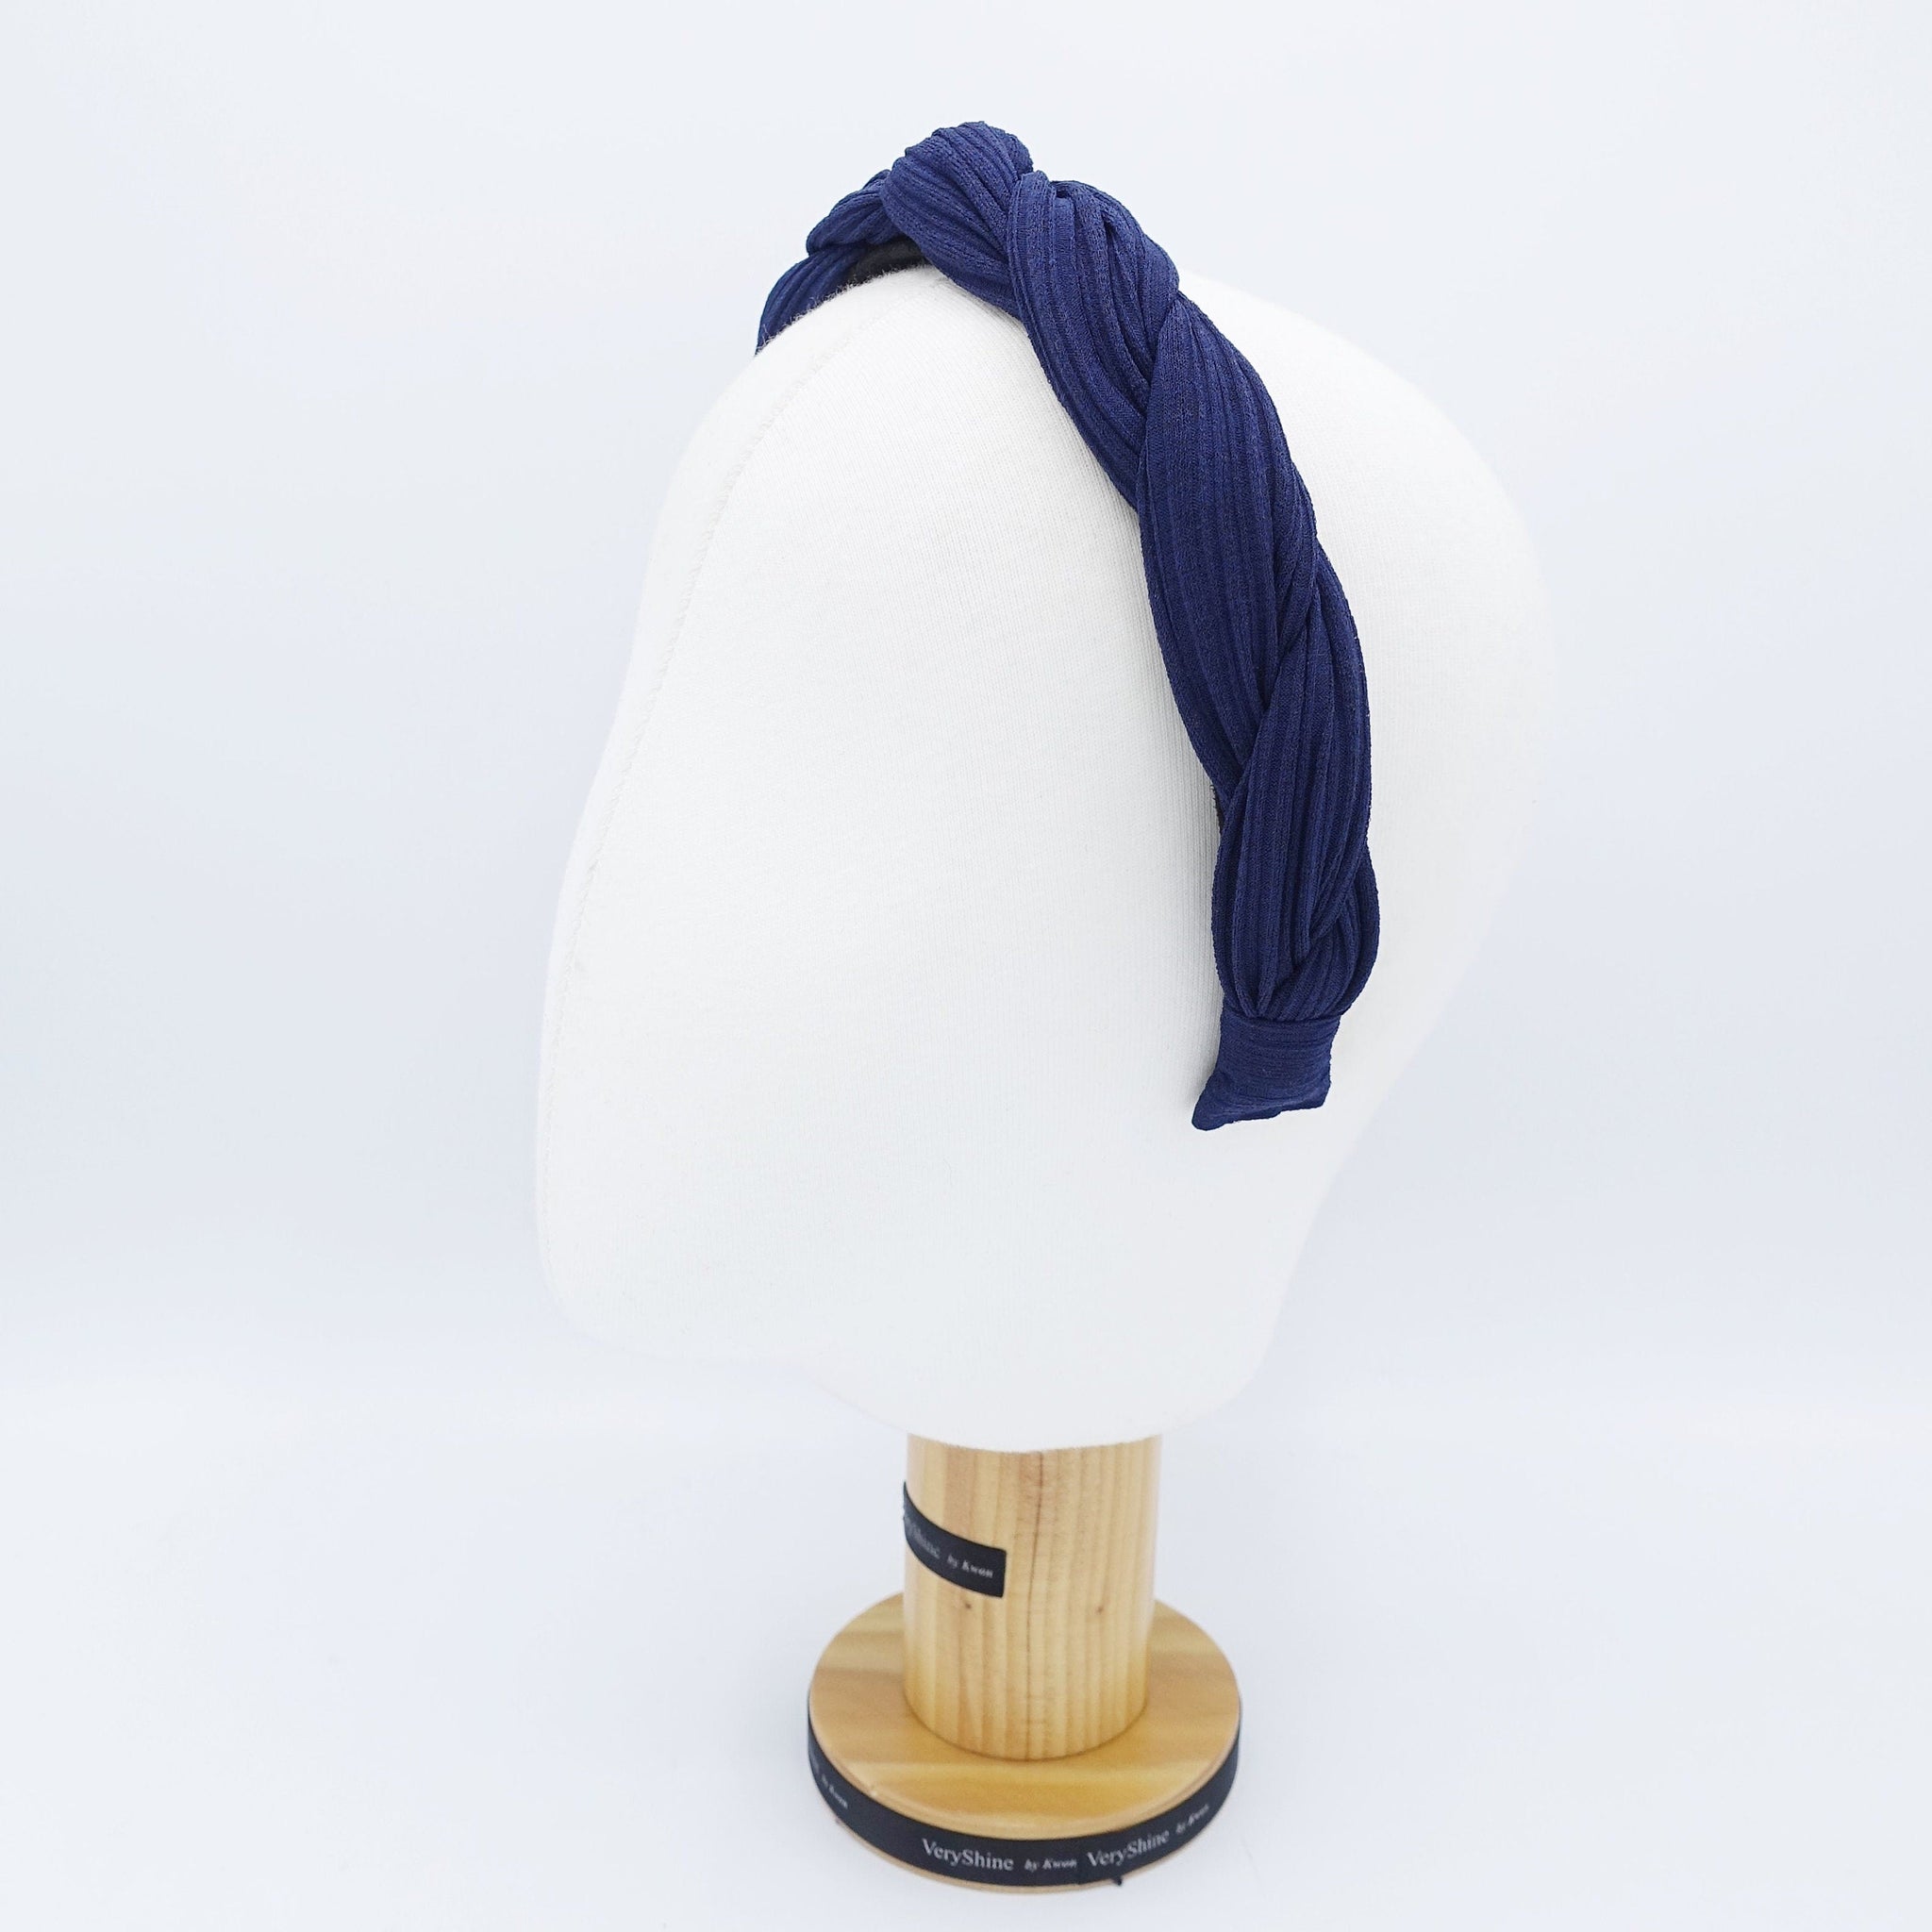 veryshine.com Headband Navy corrugated knit braided pleated cross headband for women